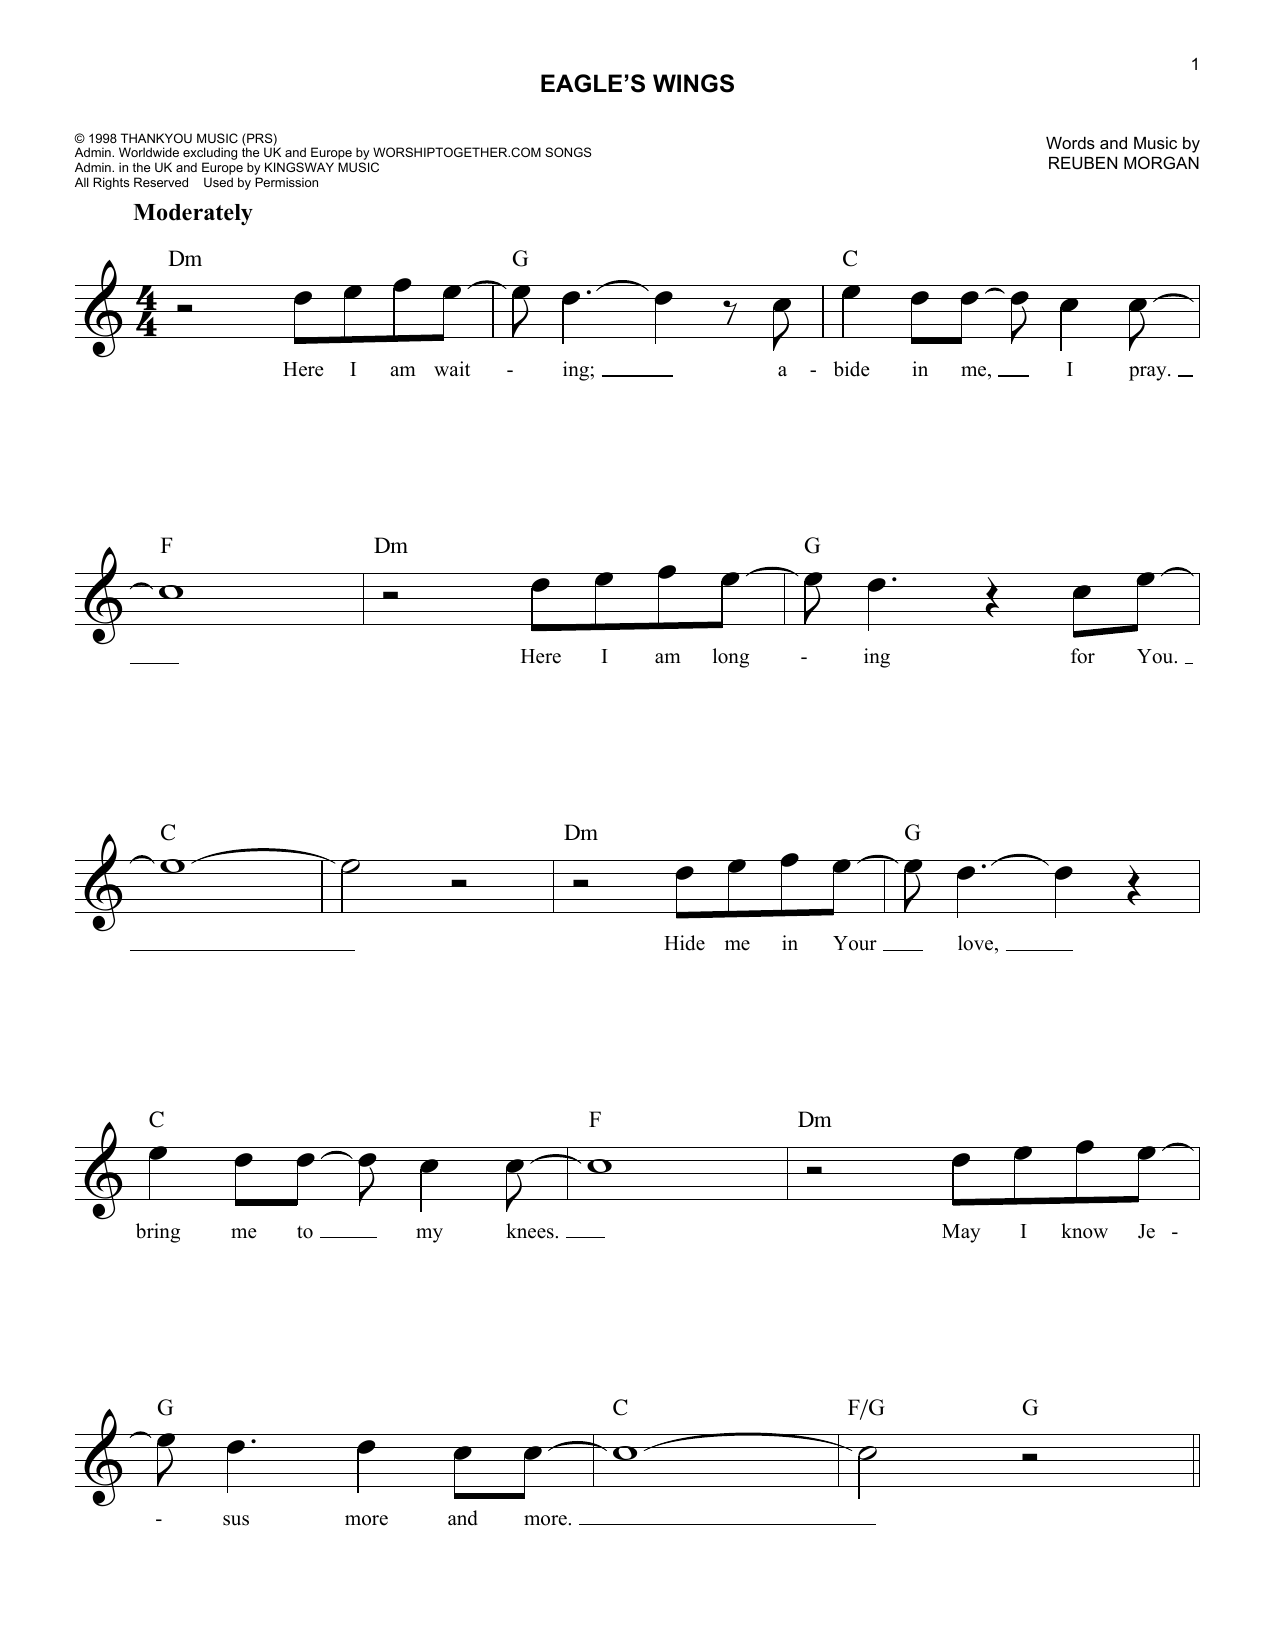 Reuben Morgan Eagle's Wings Sheet Music Notes & Chords for Melody Line, Lyrics & Chords - Download or Print PDF